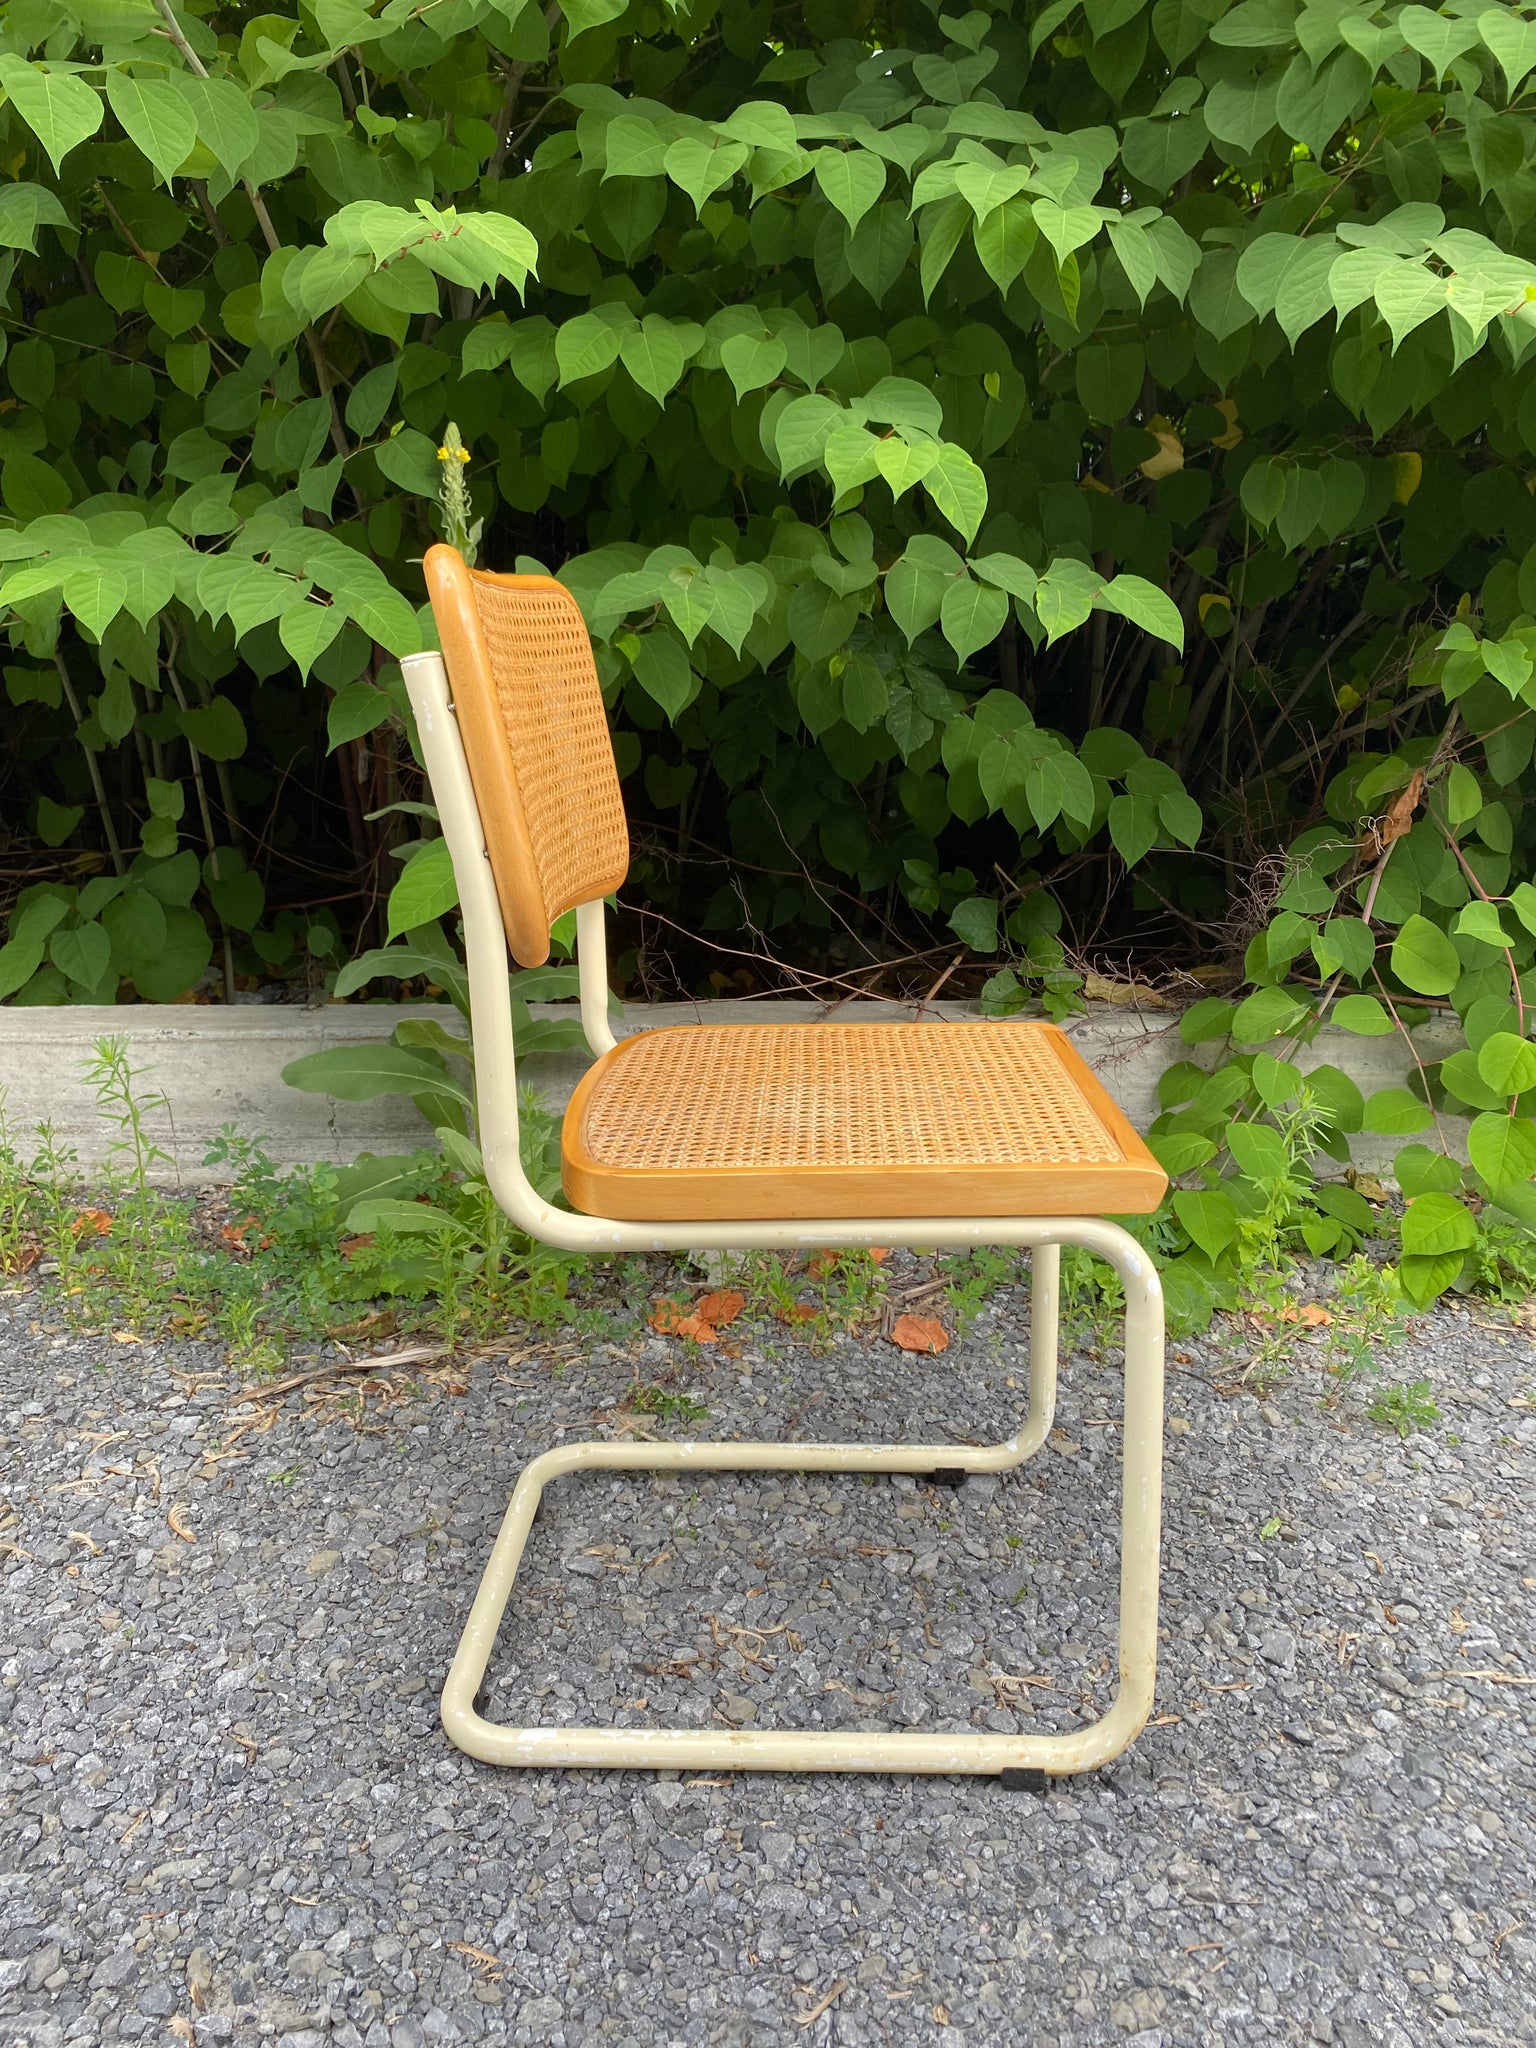 Cream & cane cantilever Cesca chairs